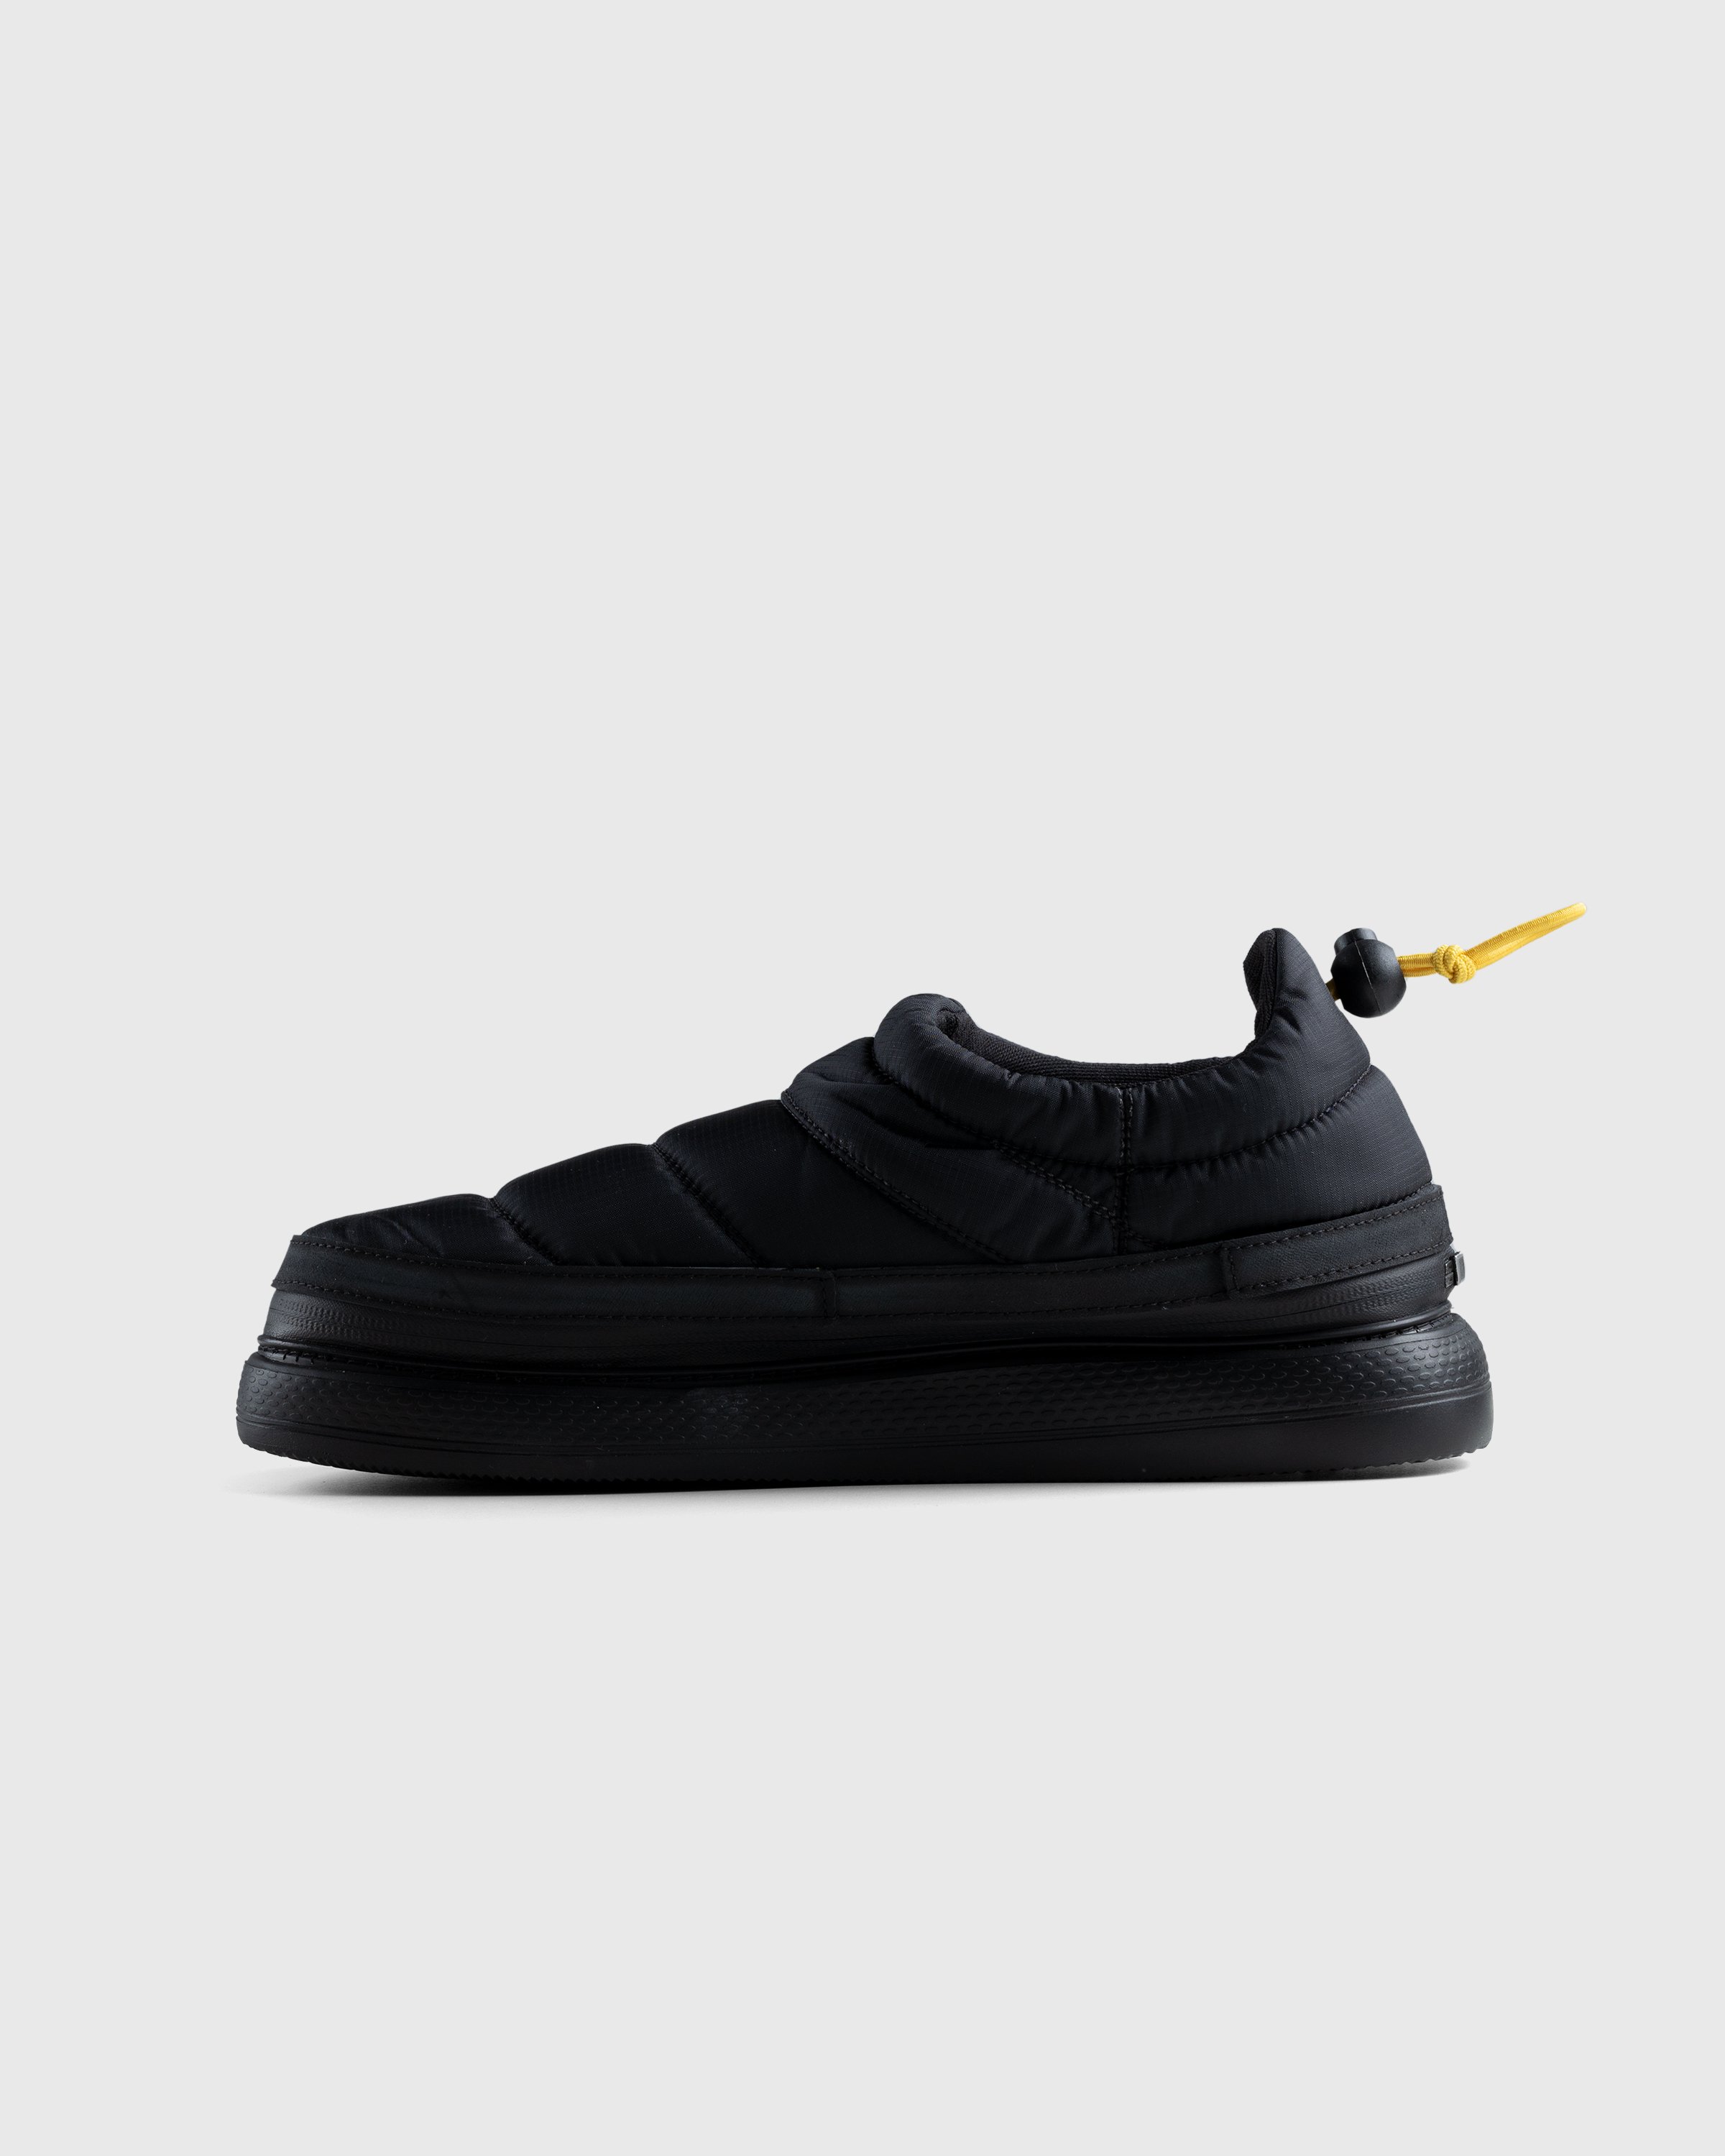 Market - Zip Top Black/Yellow - Footwear - Black - Image 2